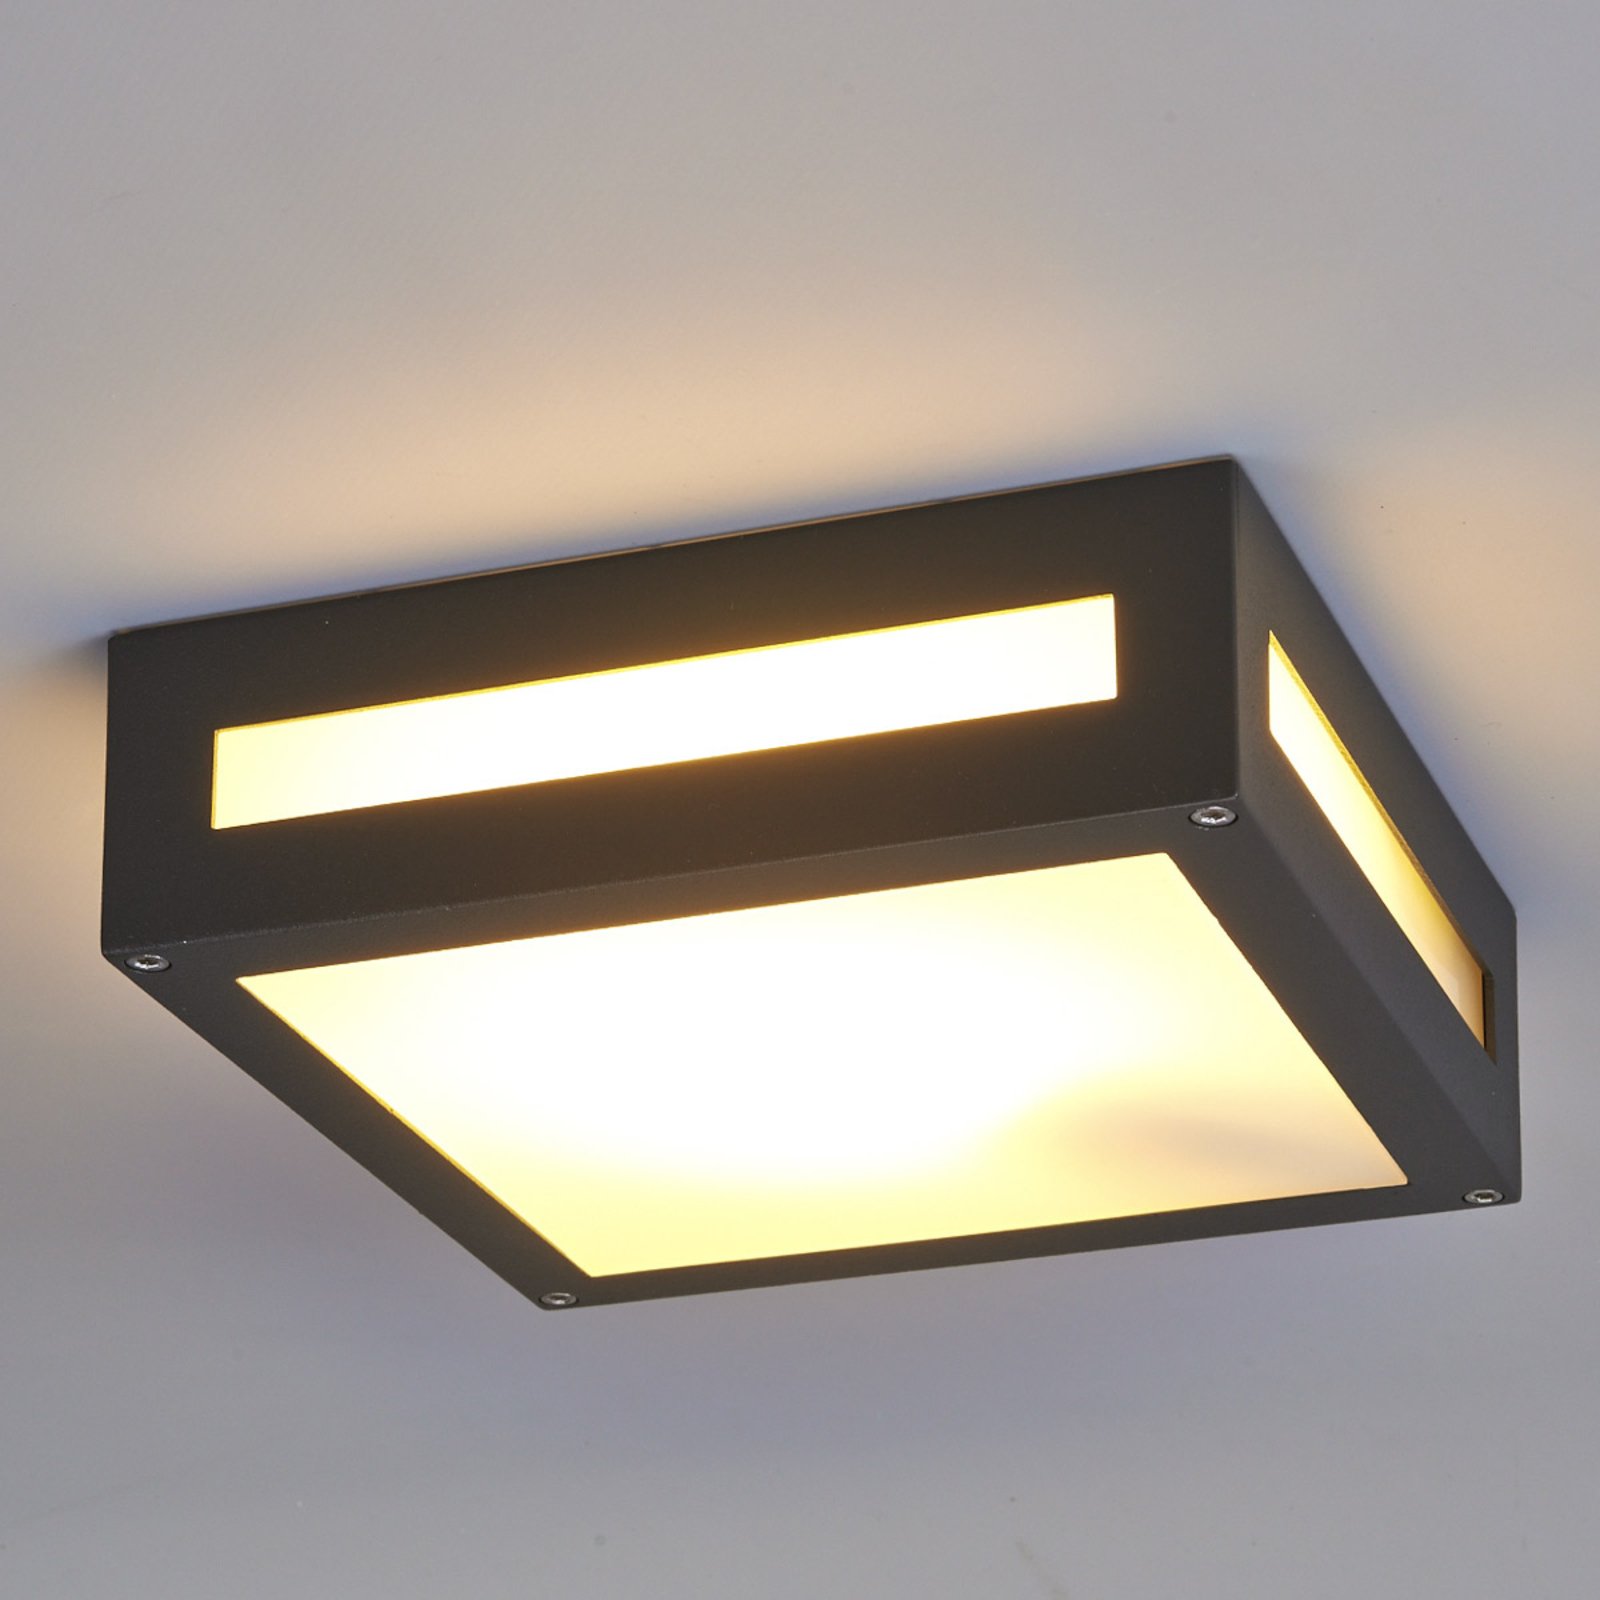 Nerea rectangular outdoor ceiling light